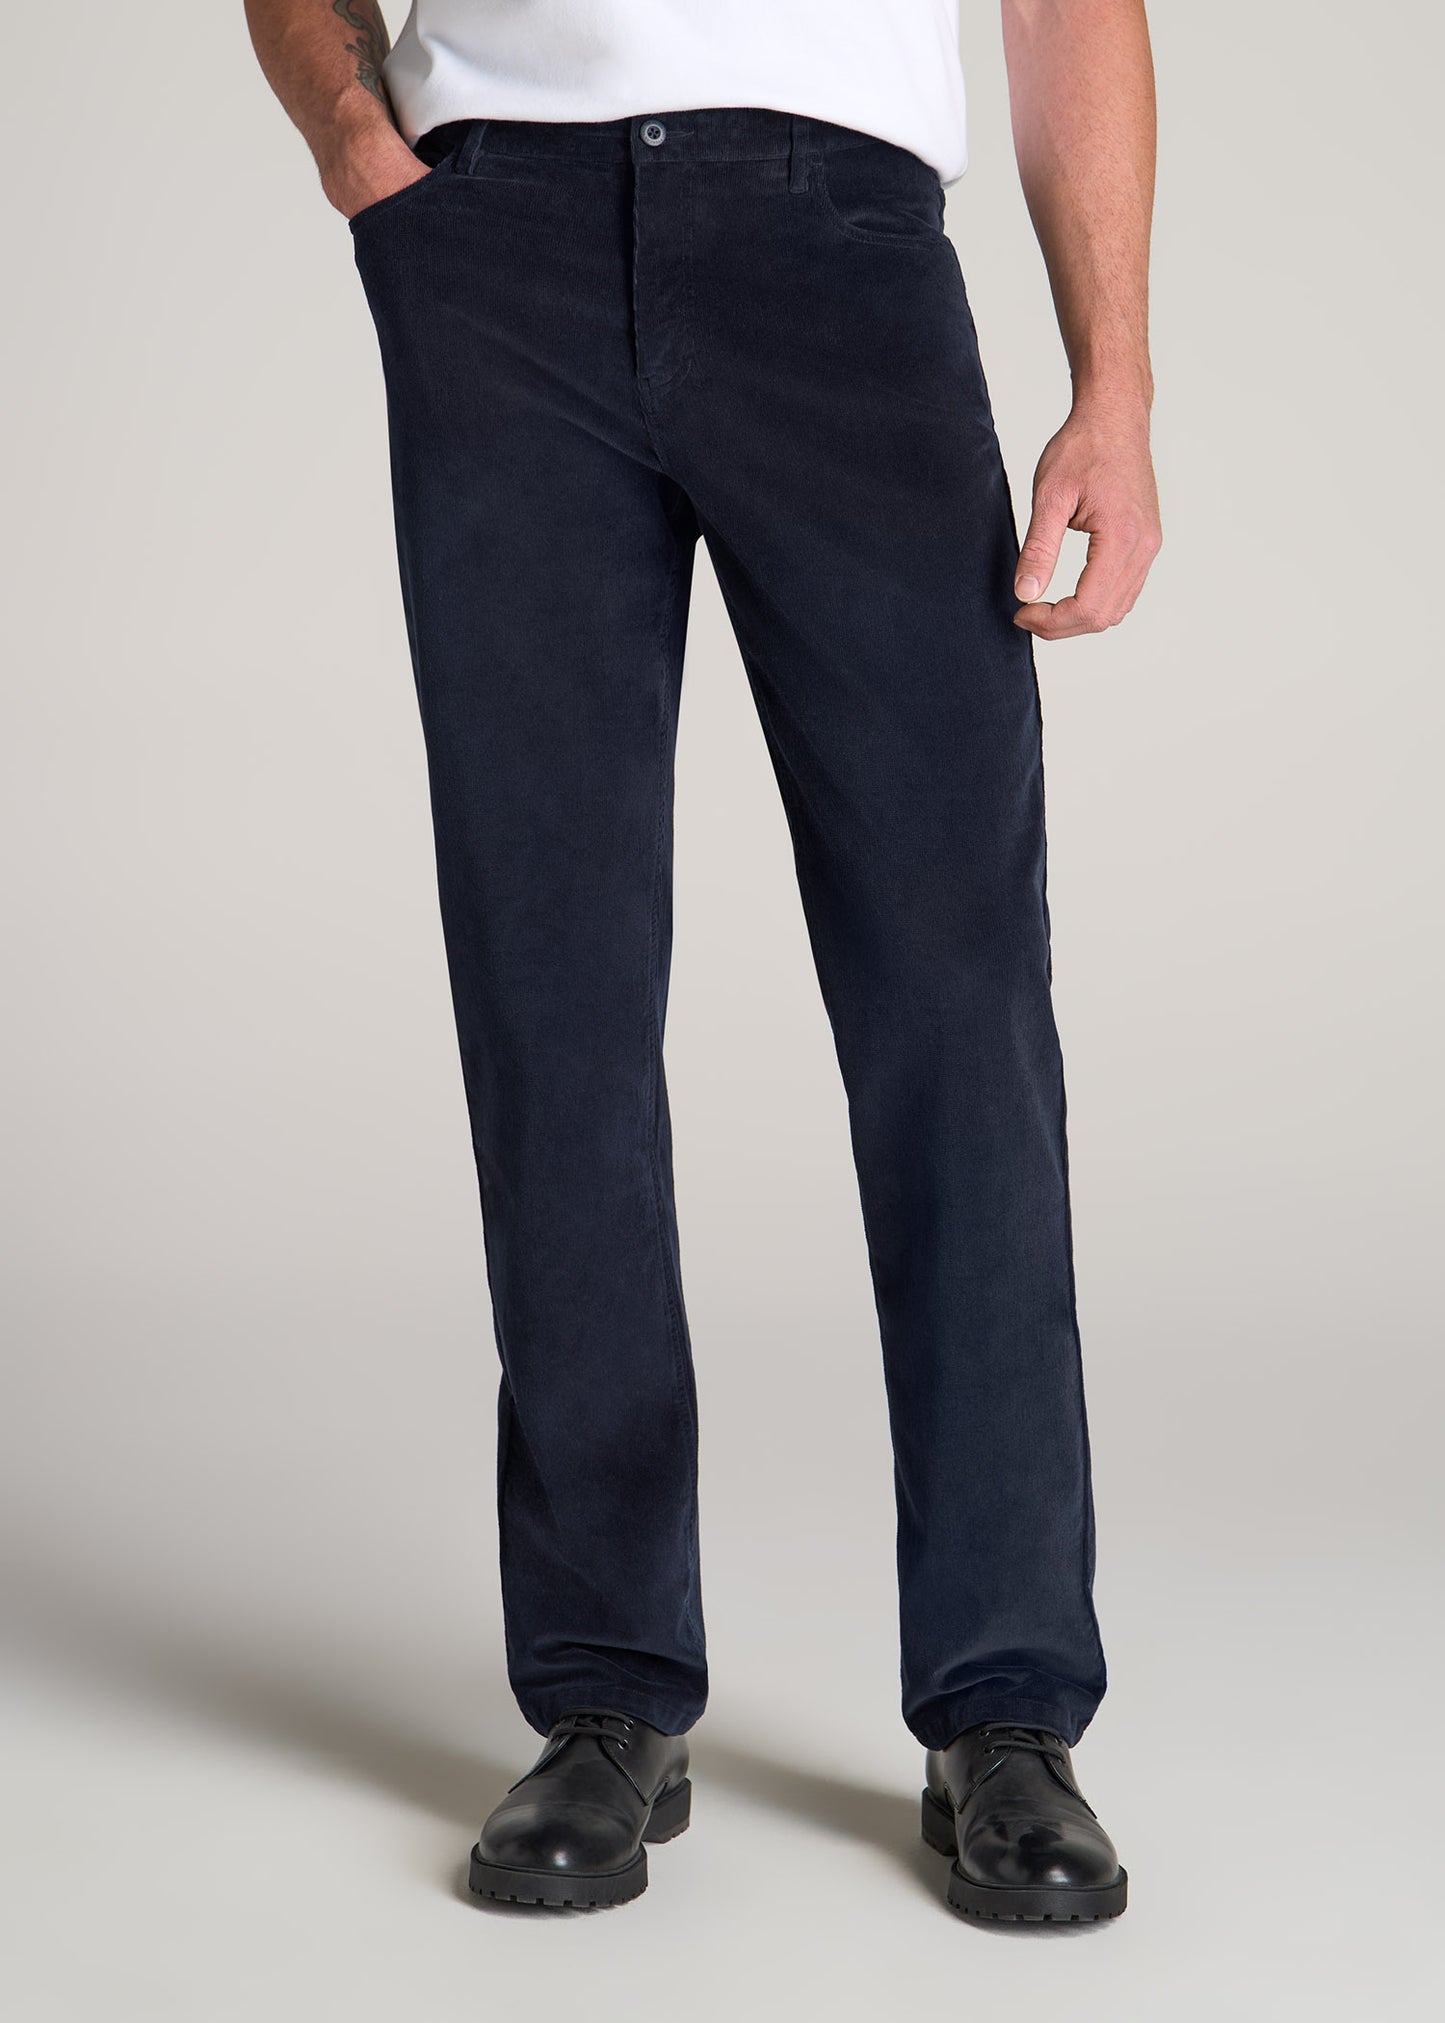 $65 New Lands' End Men's Straight Fit 5 Pocket Corduroy Pants